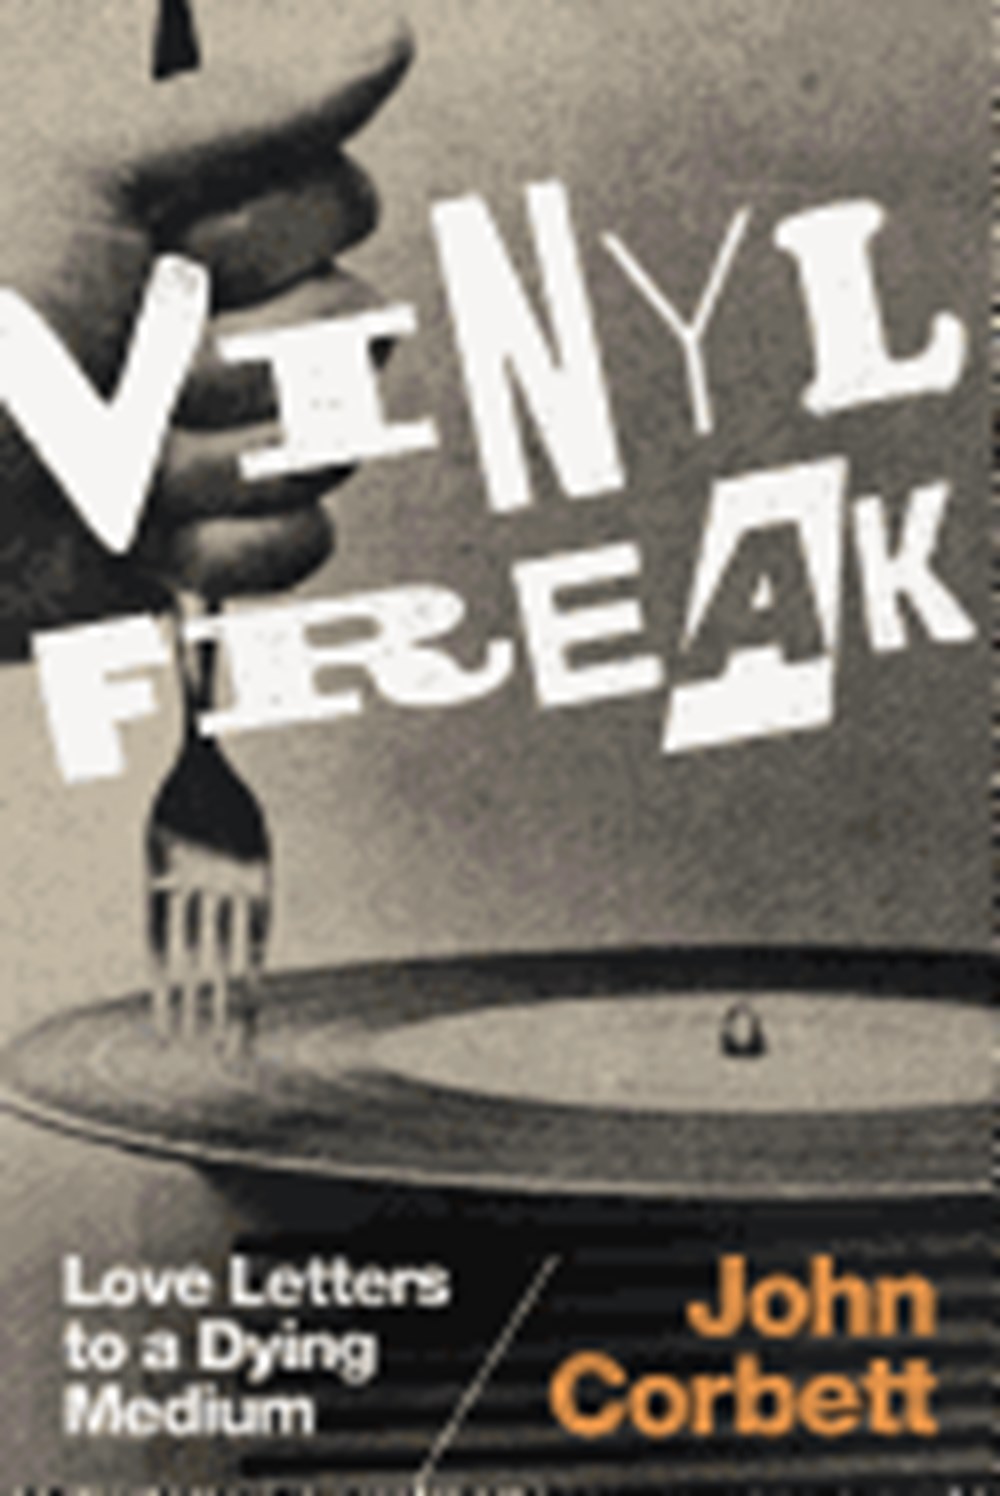 Vinyl Freak: Love Letters to a Dying Medium